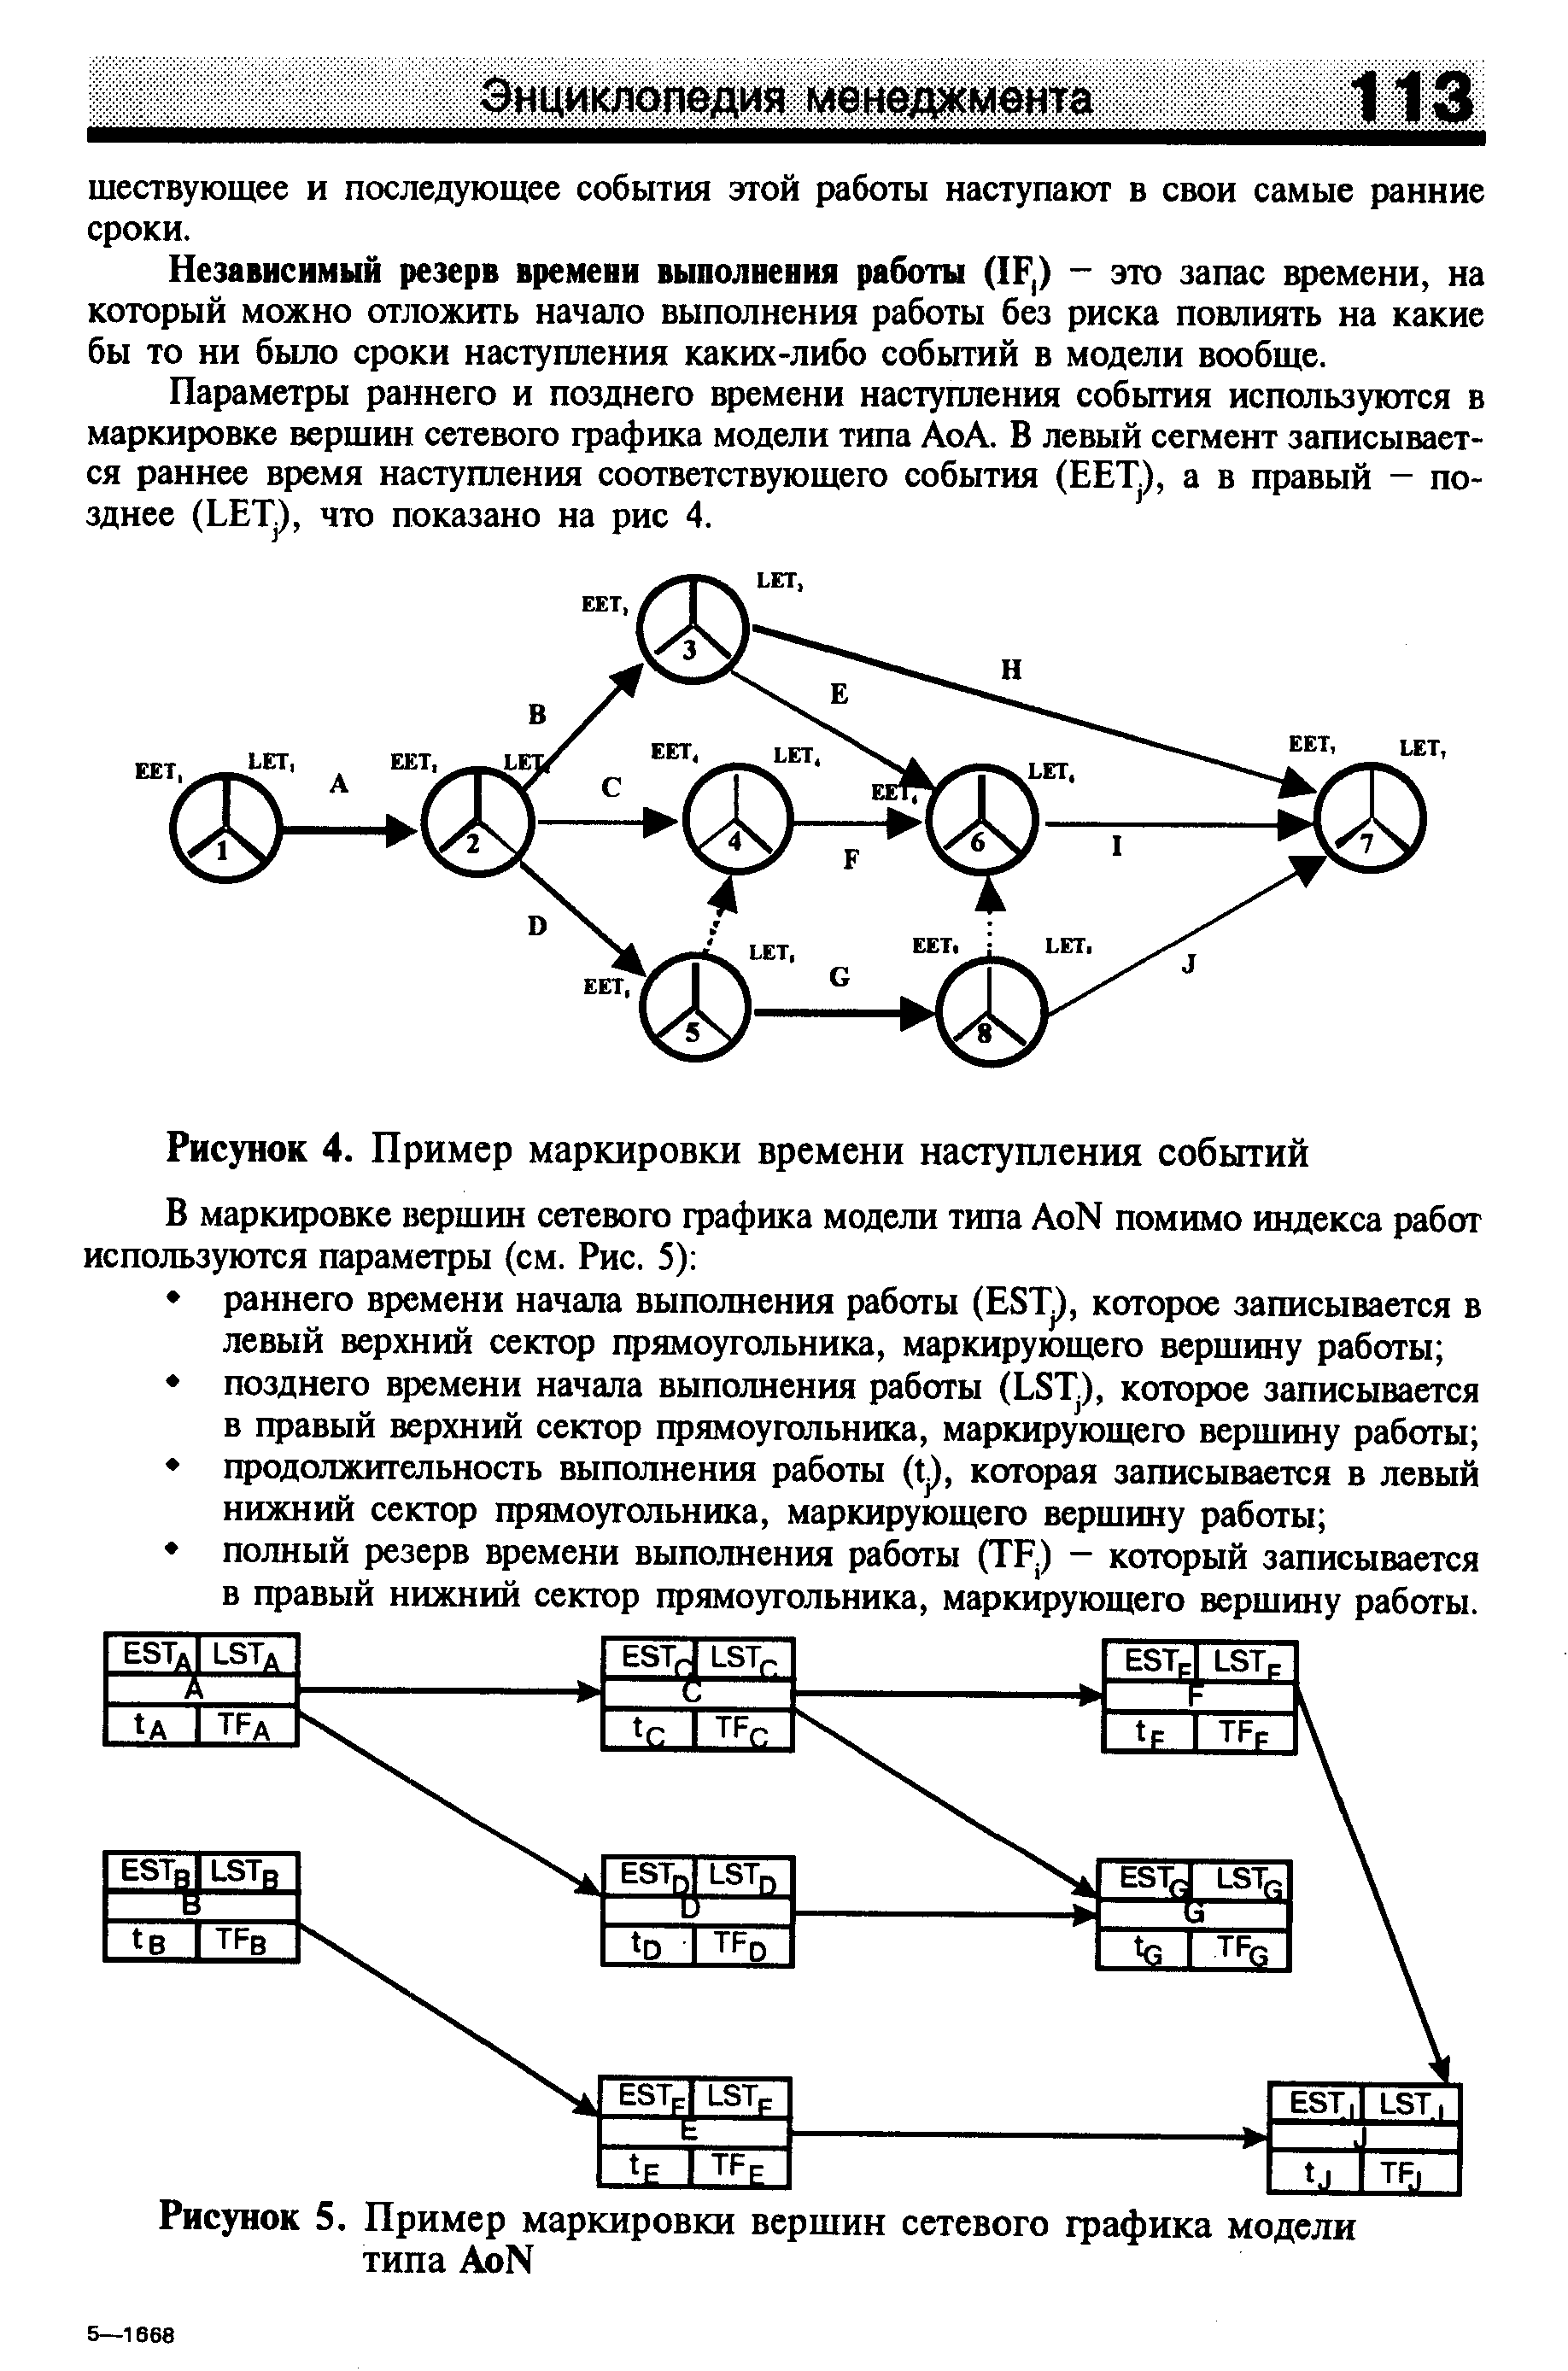 Рисунок 5. Пример маркировки вершин сетевого графика модели типа AoN
